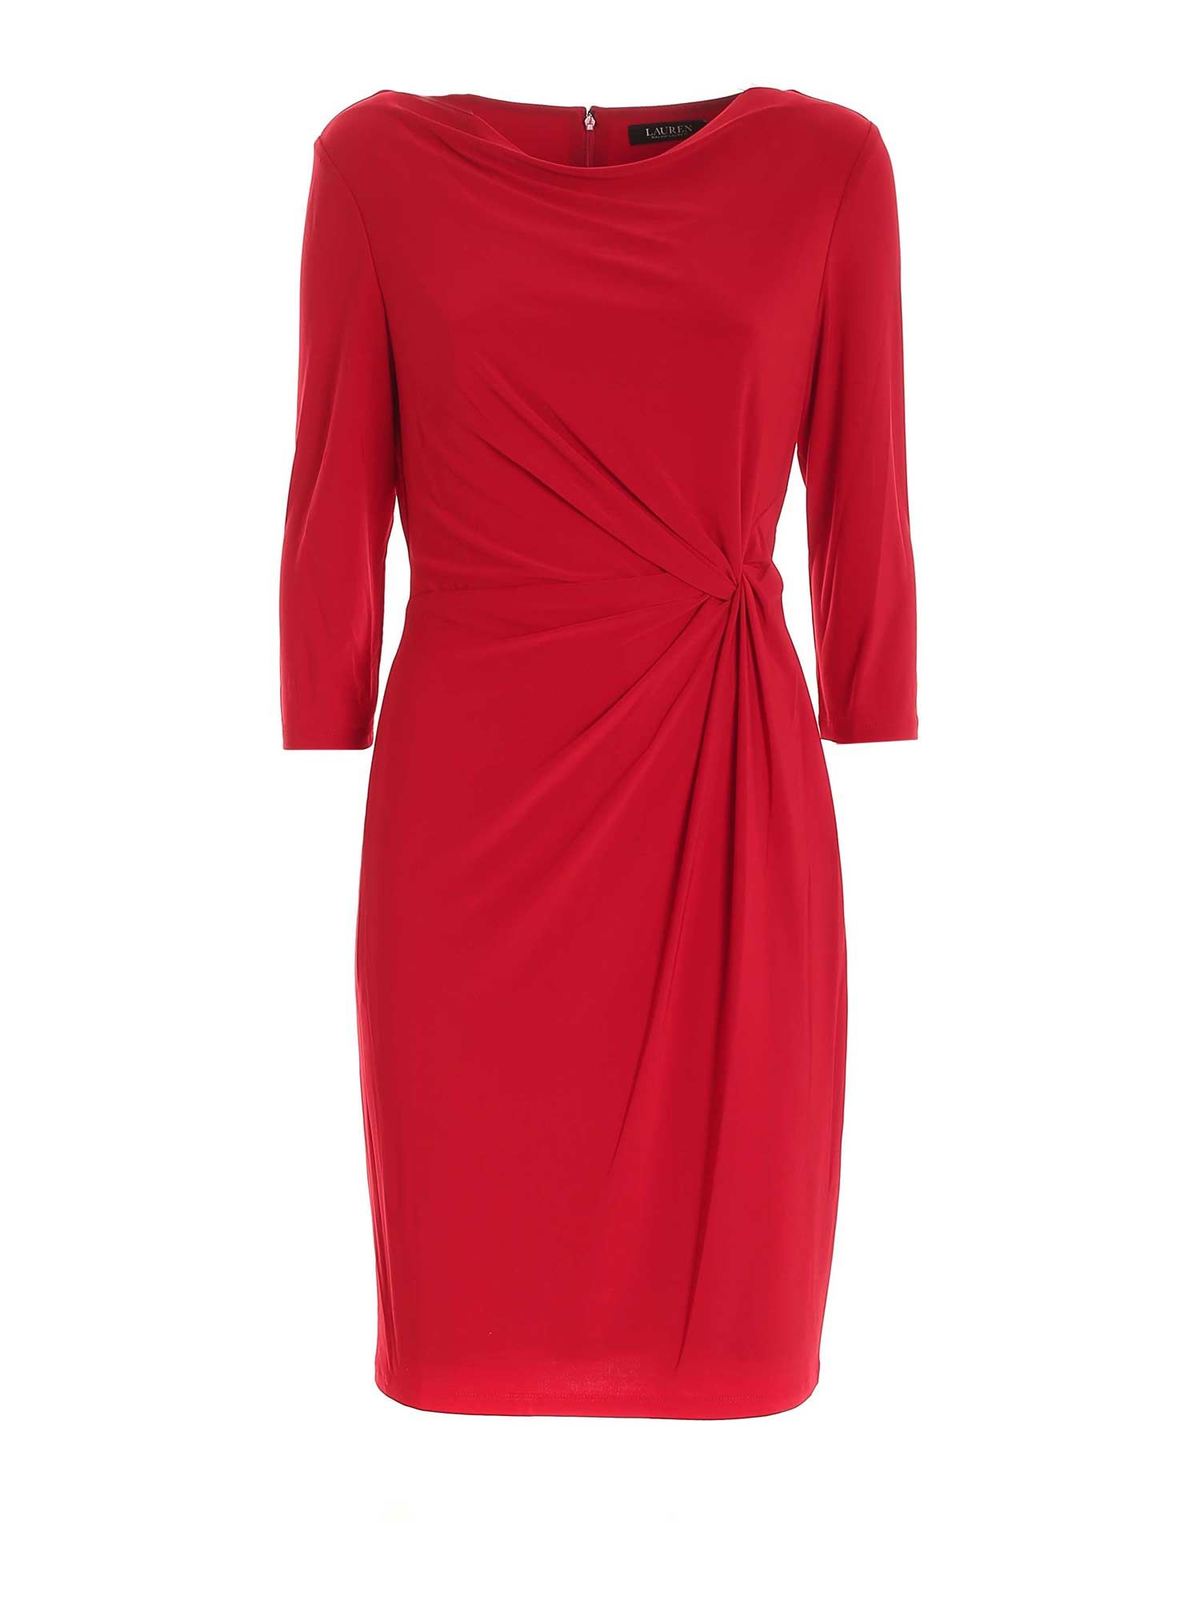 LAUREN Ralph Lauren Jersey Dress with Twisted Knot Women's Size 6P